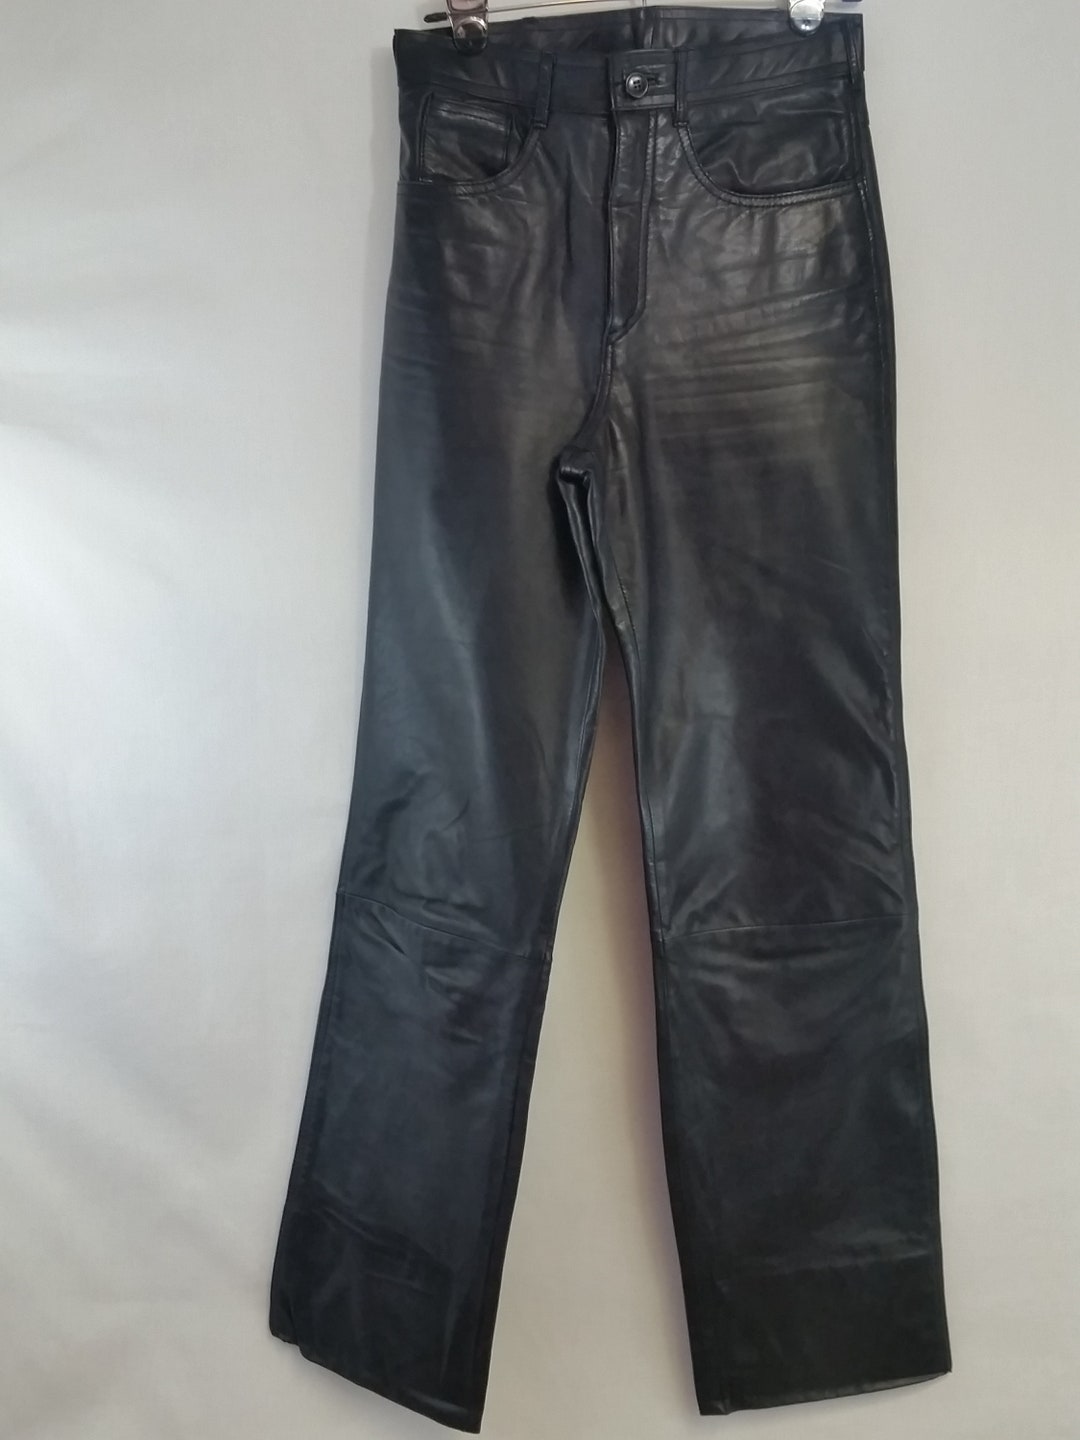 Vintage Black Leather Pants Women's 29 High Waist Straight Leg Front ...